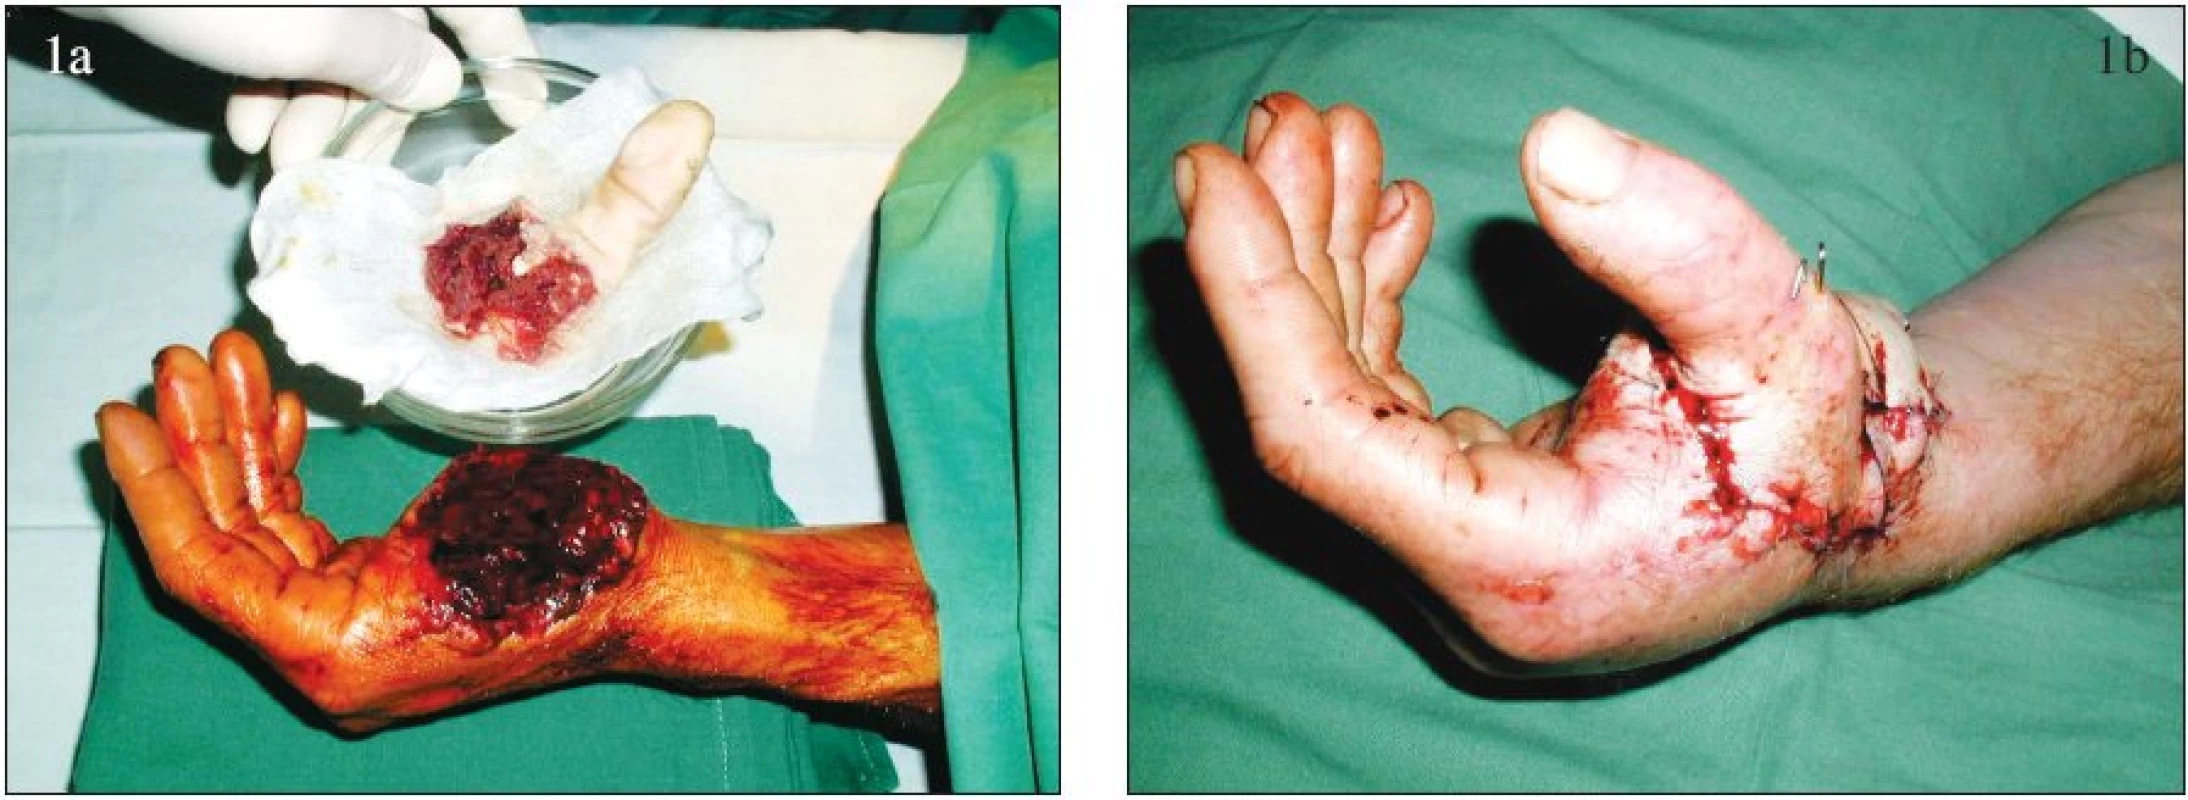 Replantace palce ruky: a – amputovaný palec, b – stav po replantaci.
Fig. 1. Thumb replantation: a – amputated thumb, b – post- replantation condition.
